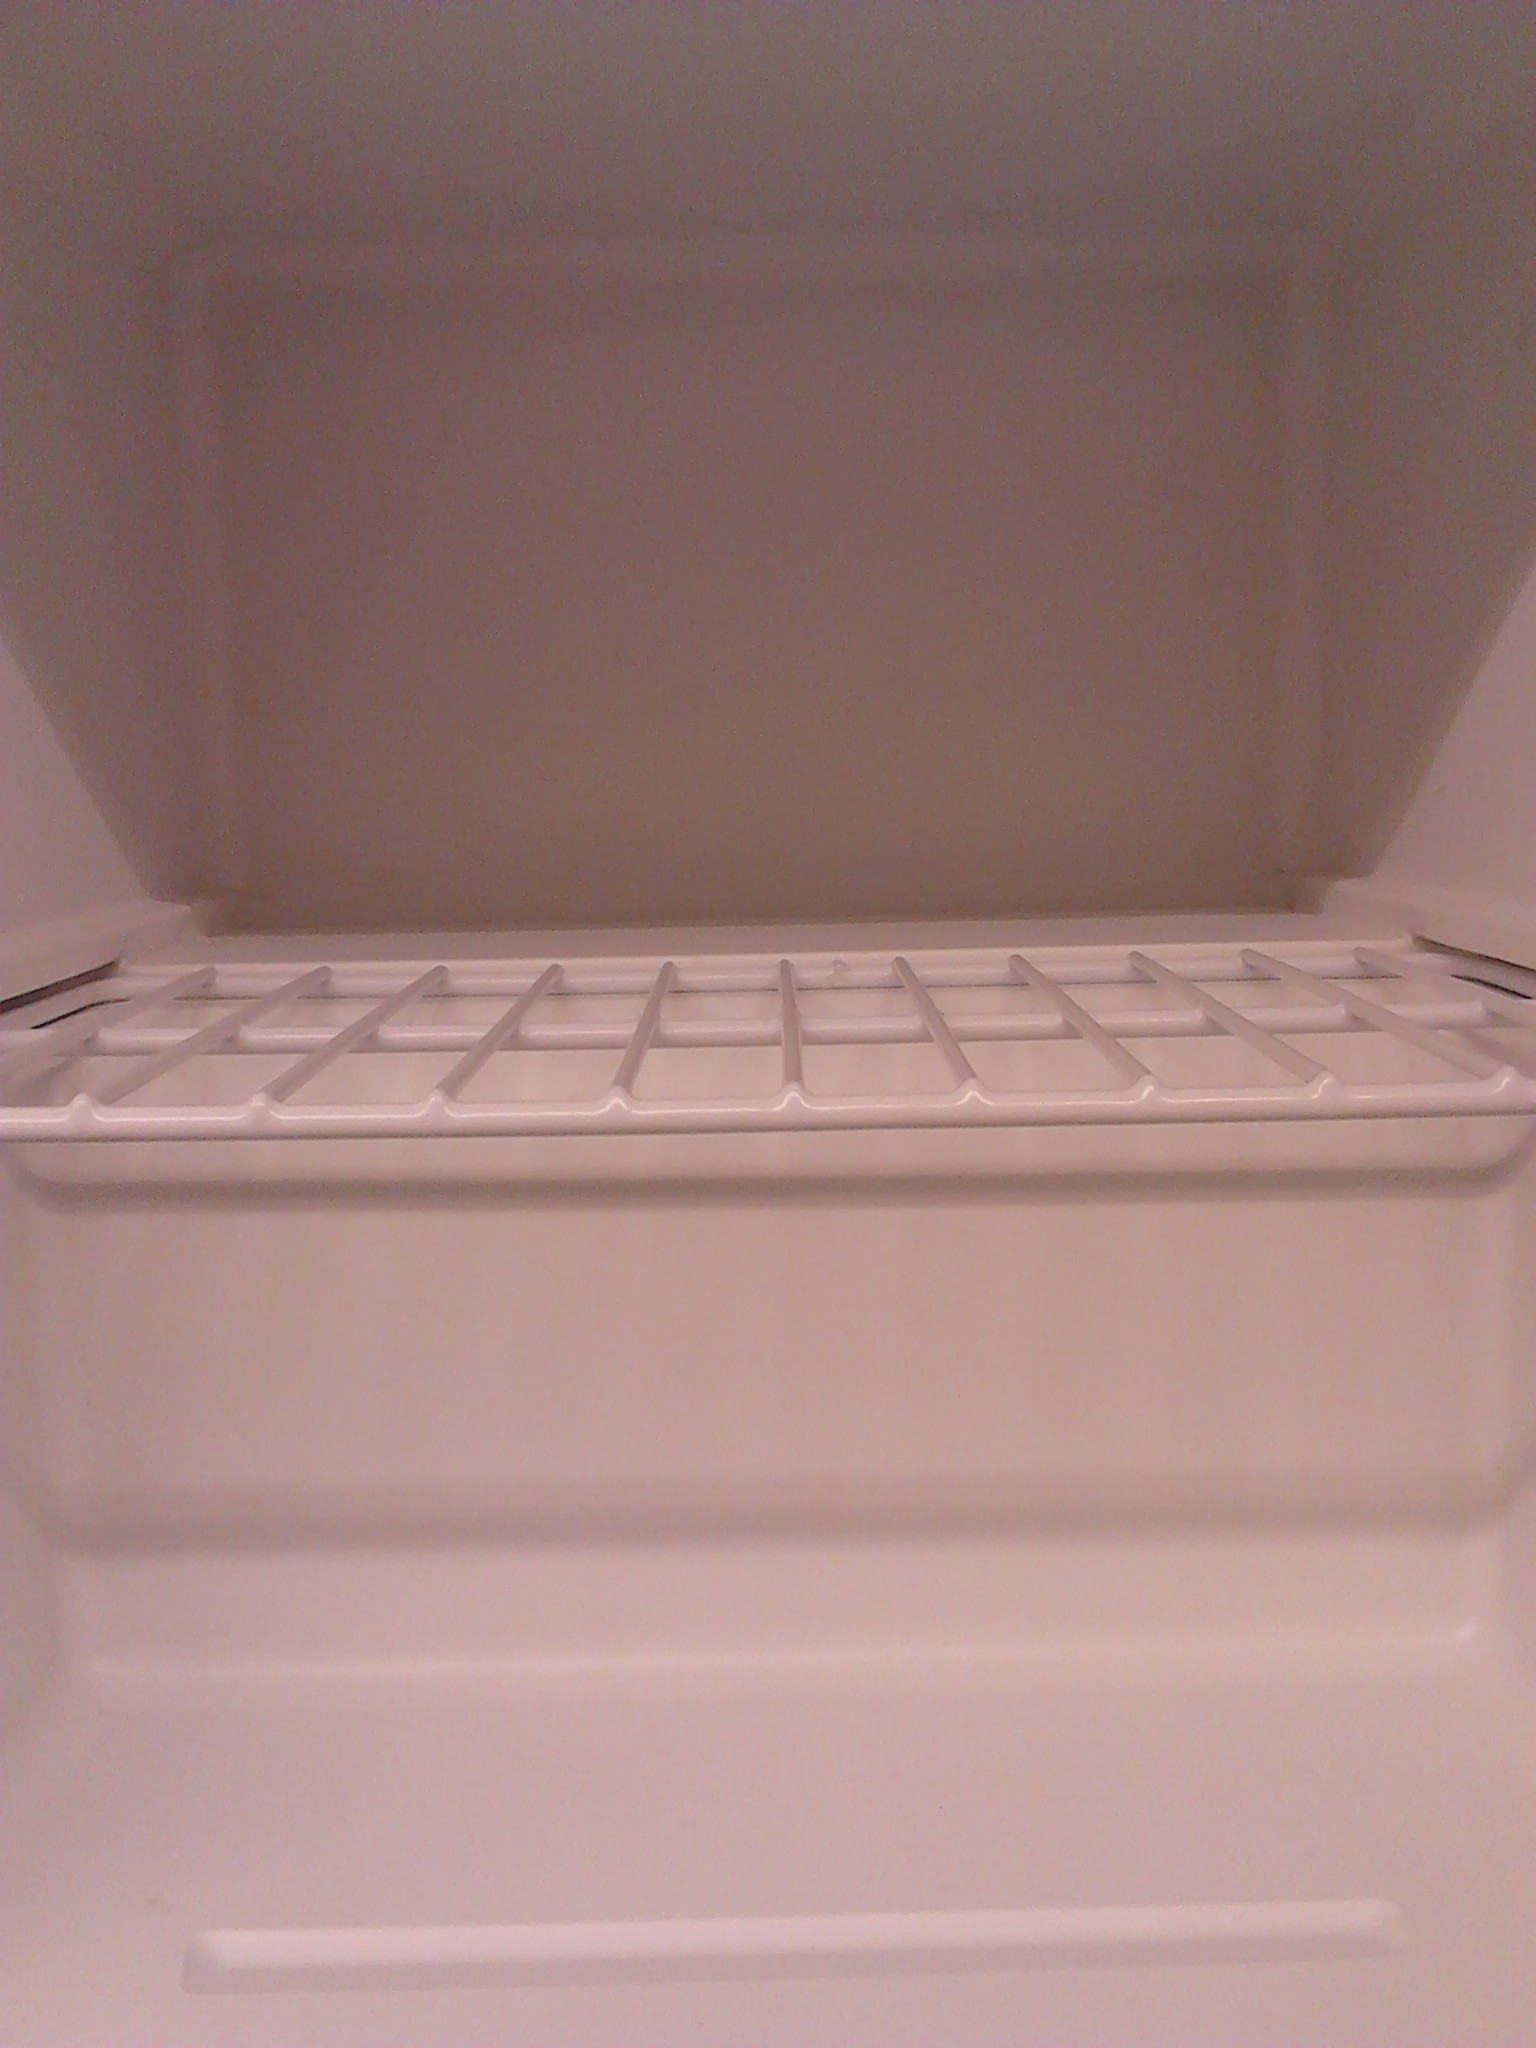 Mini Kühlschrank Fach